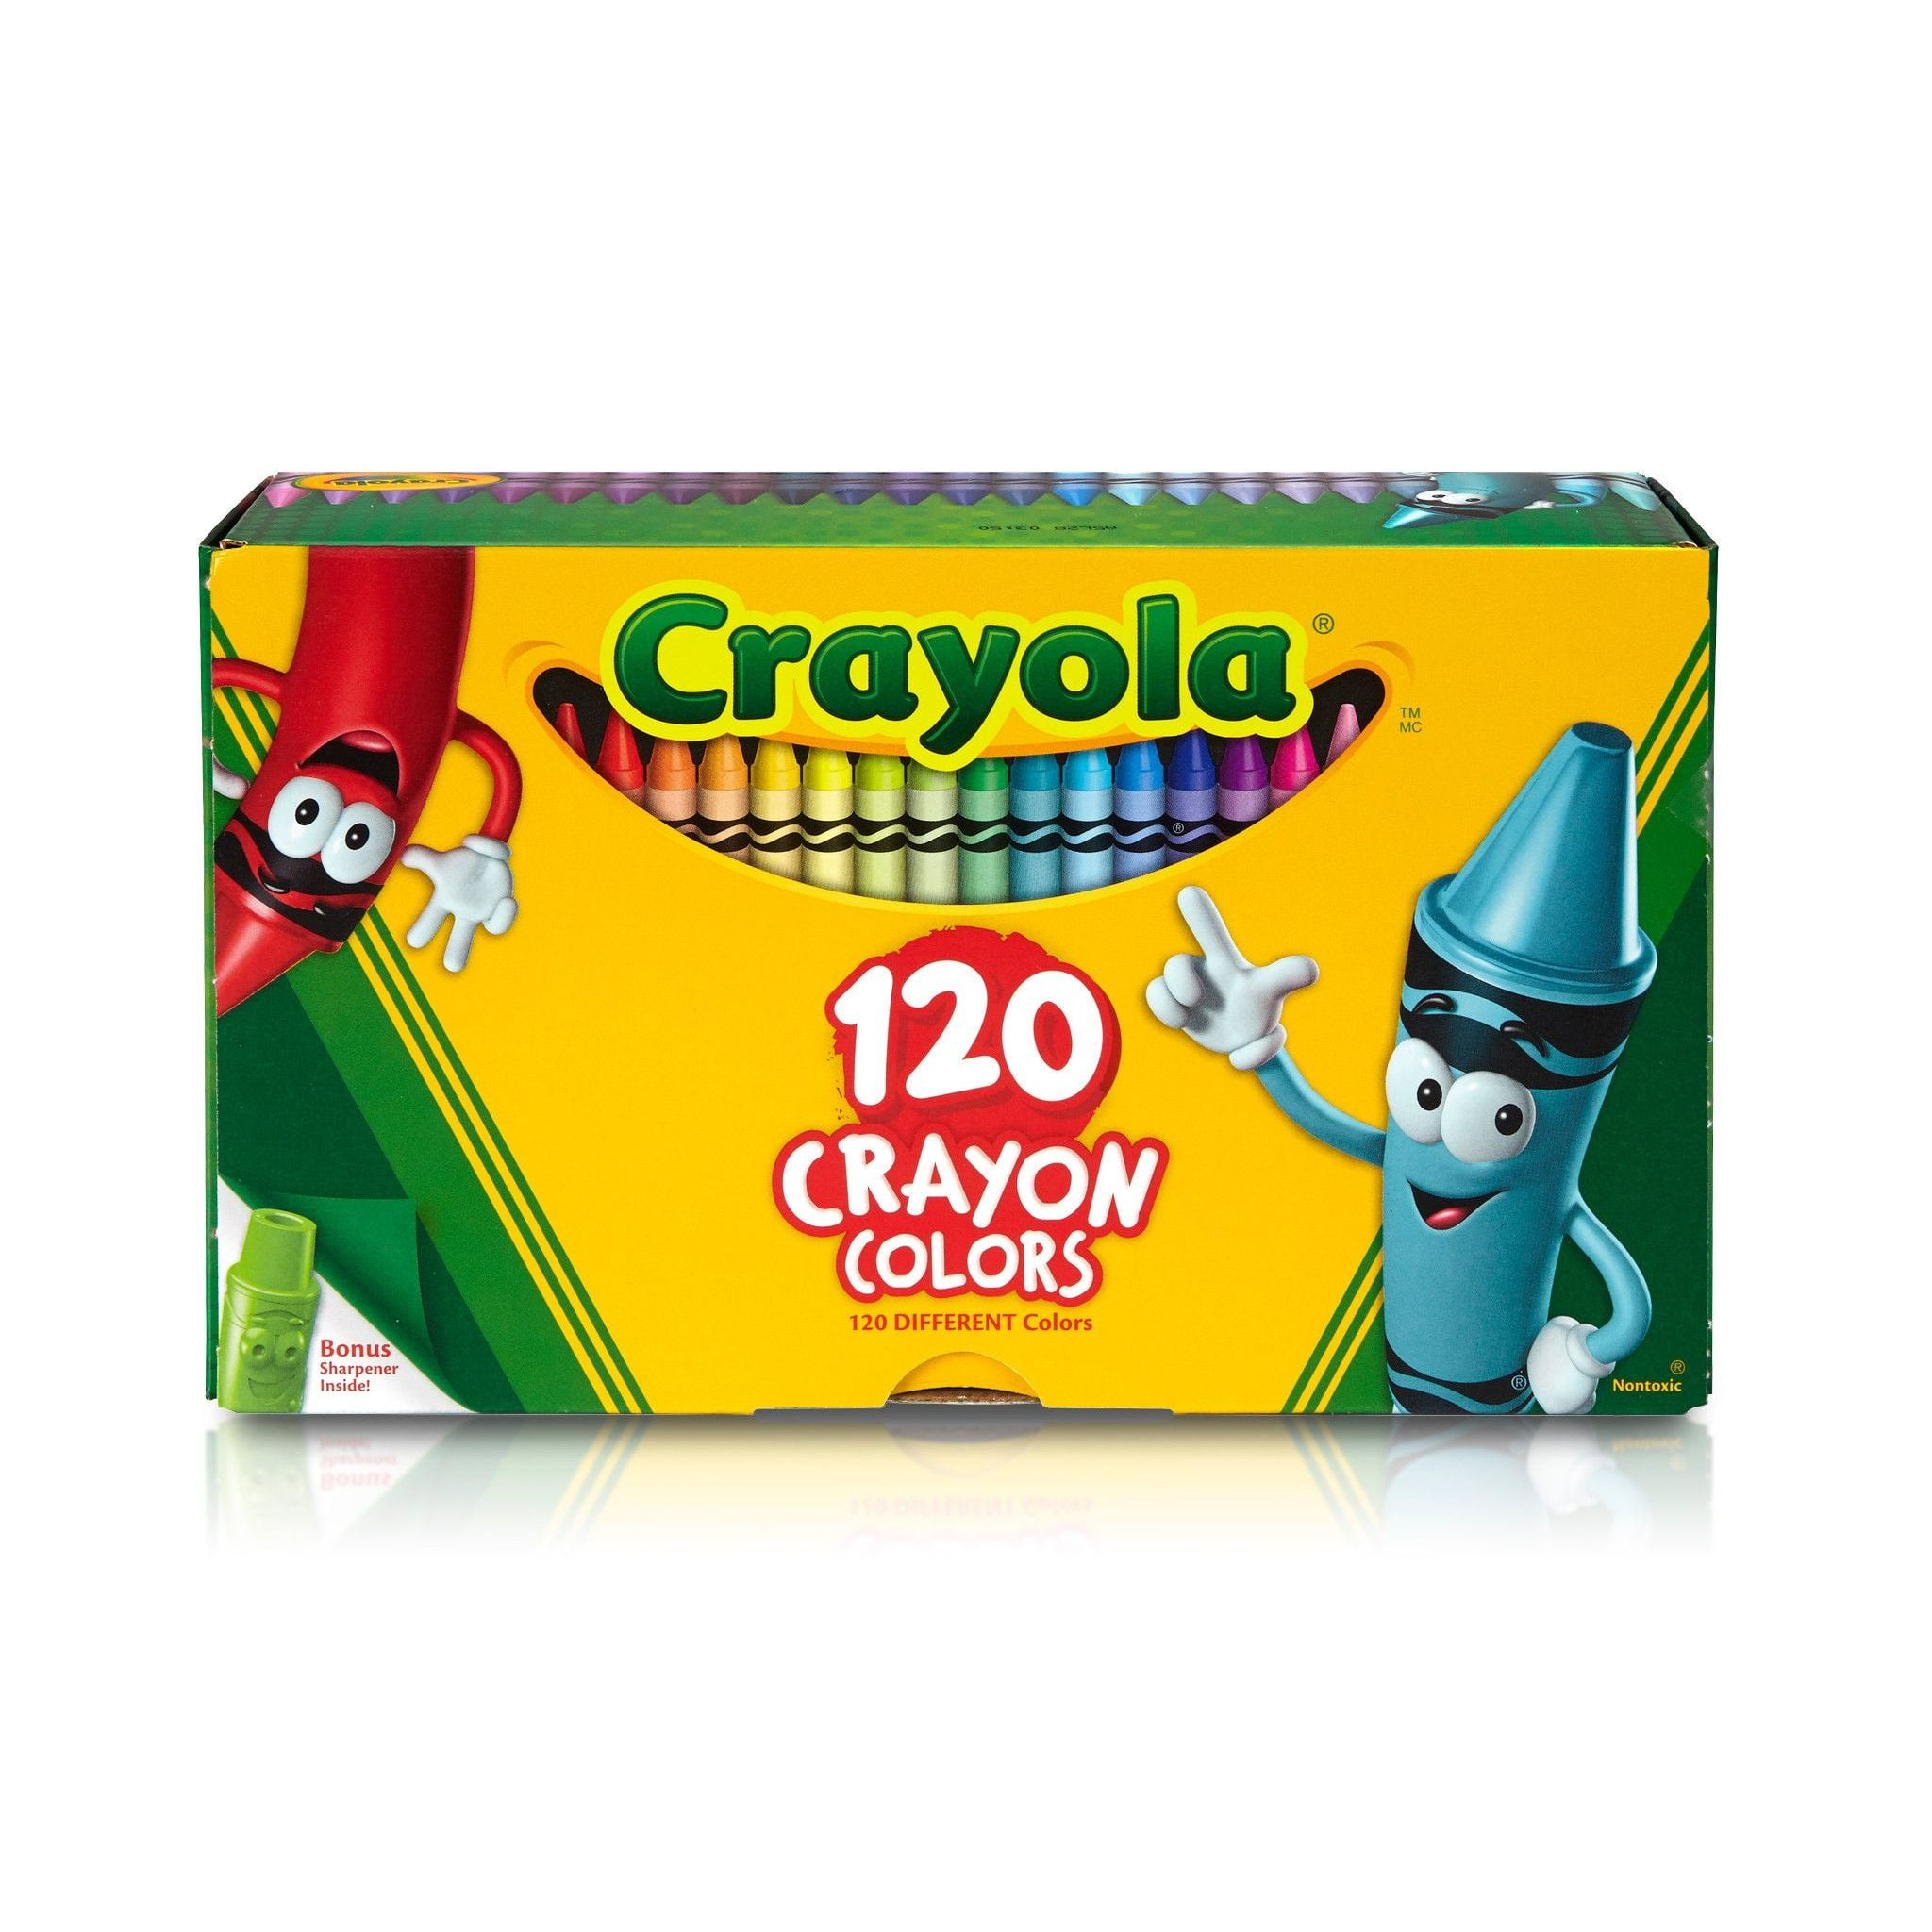 Big Box of 64 Hallmark 2013 Crayola Crayons Ornament Coloring Artist Child Art